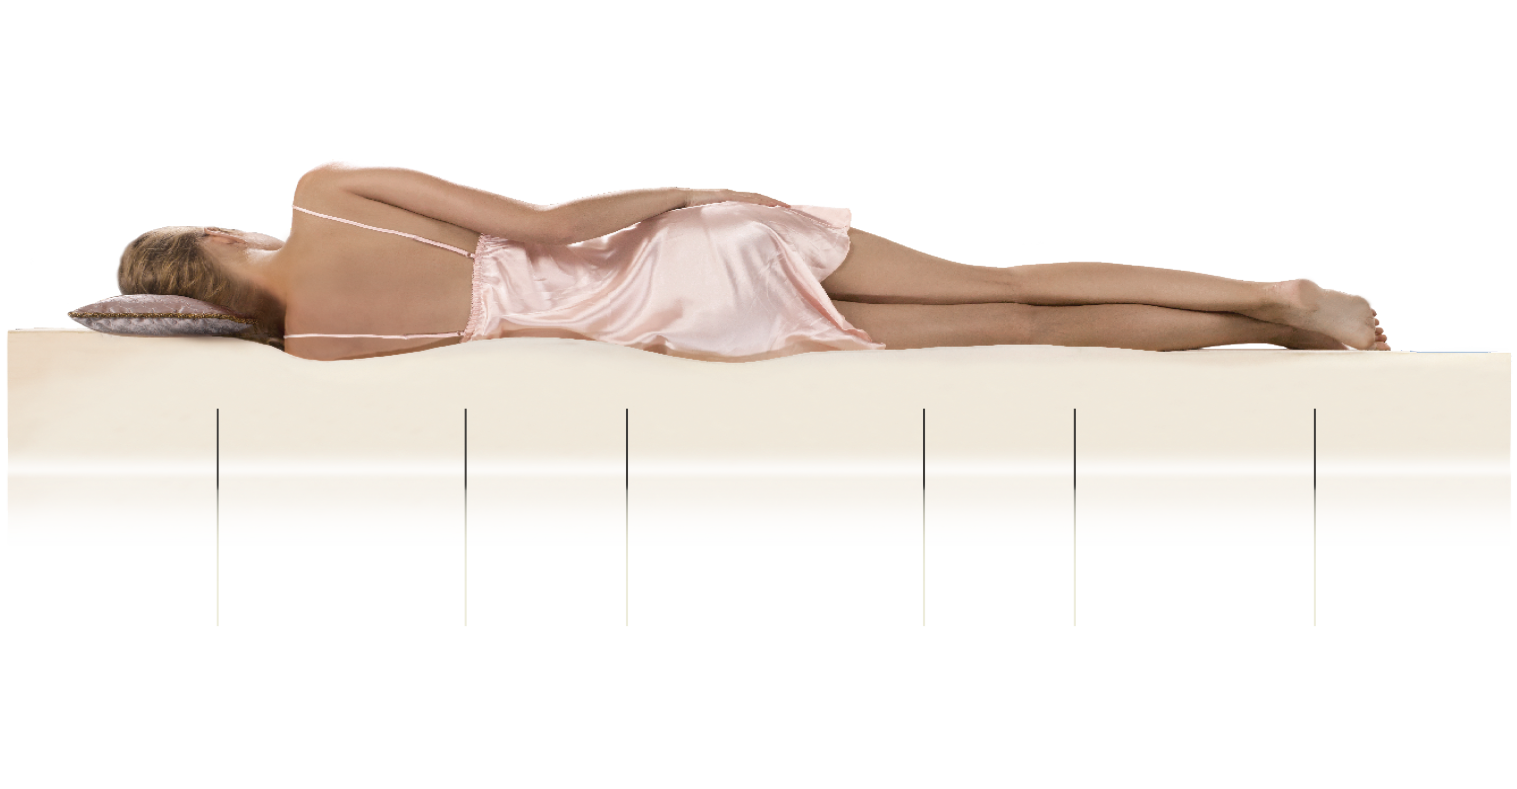 noble side sleeper